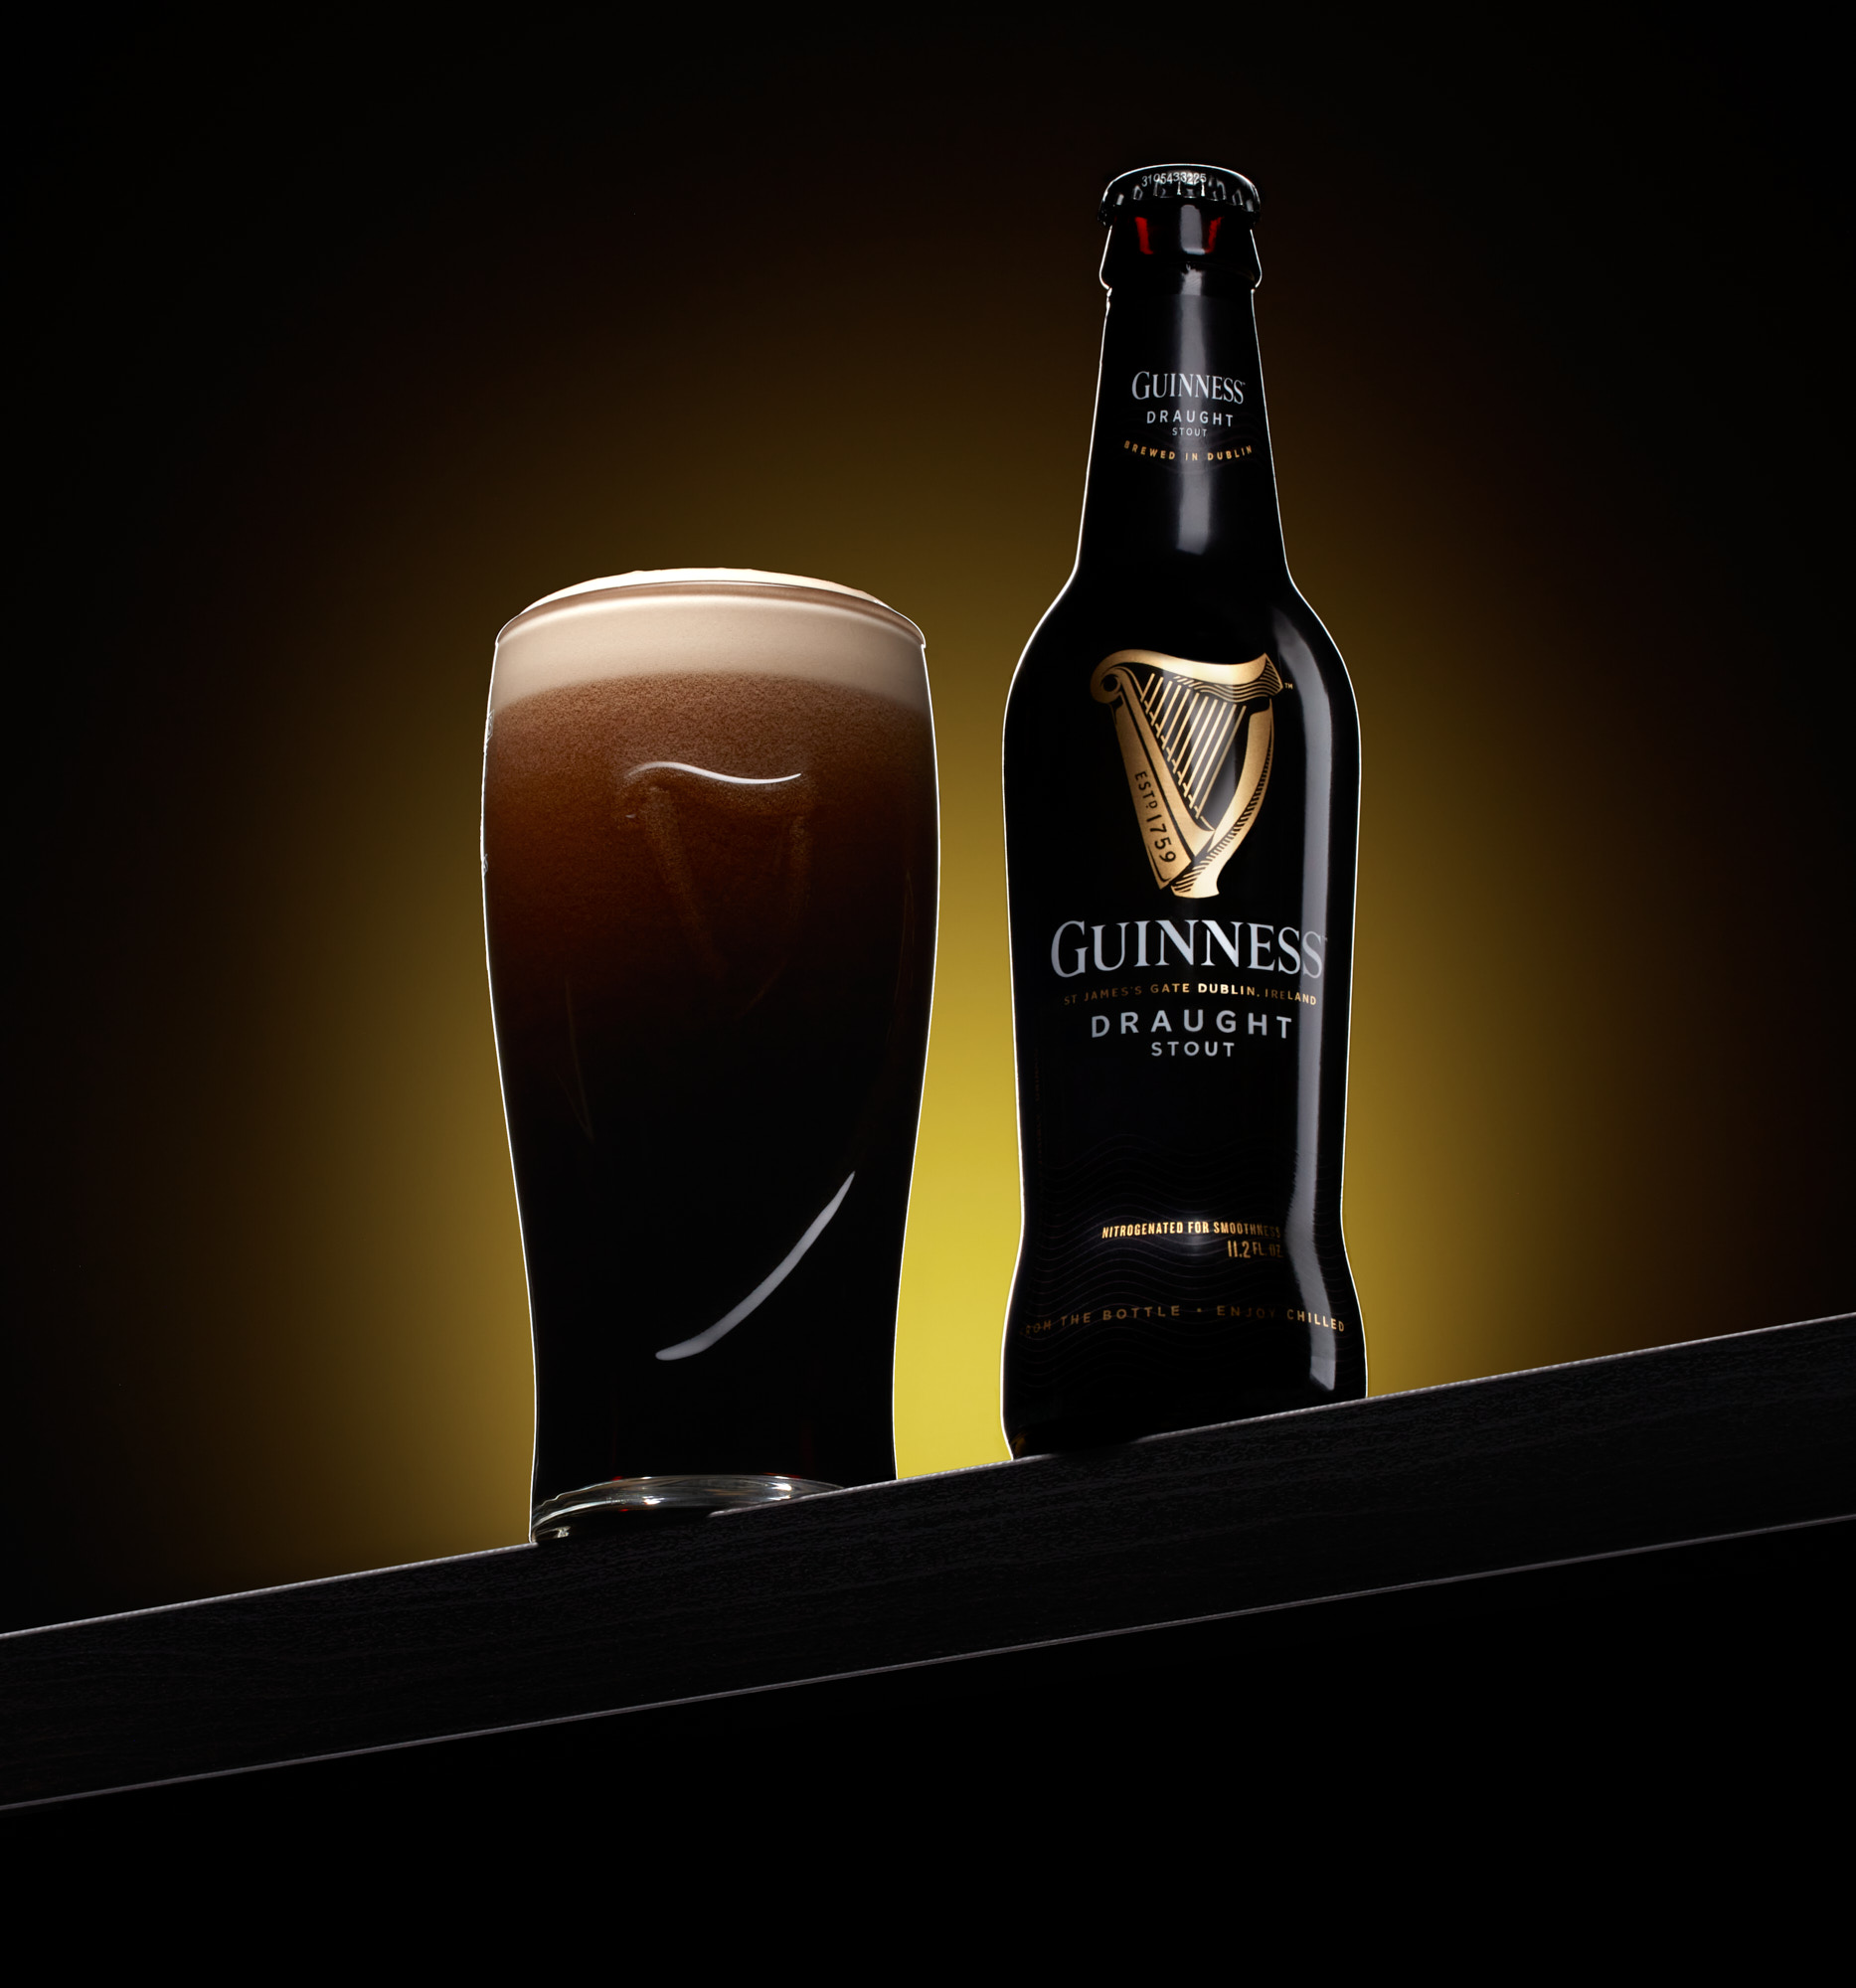 Guinness Draught in a bottle.